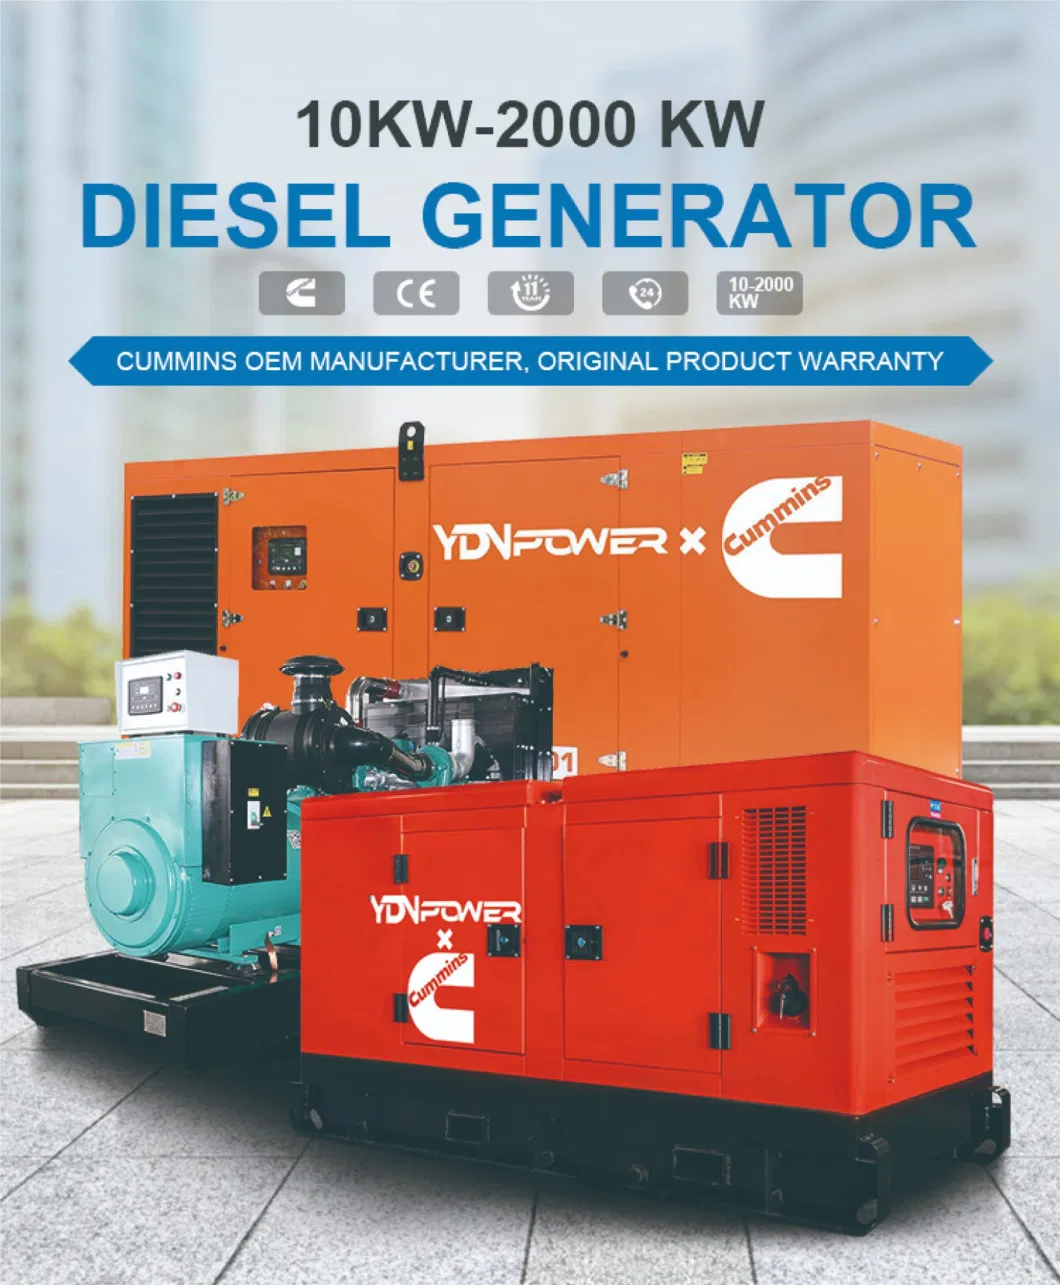 125 kVA Silent Type Diesel Generator with Cummins Engine